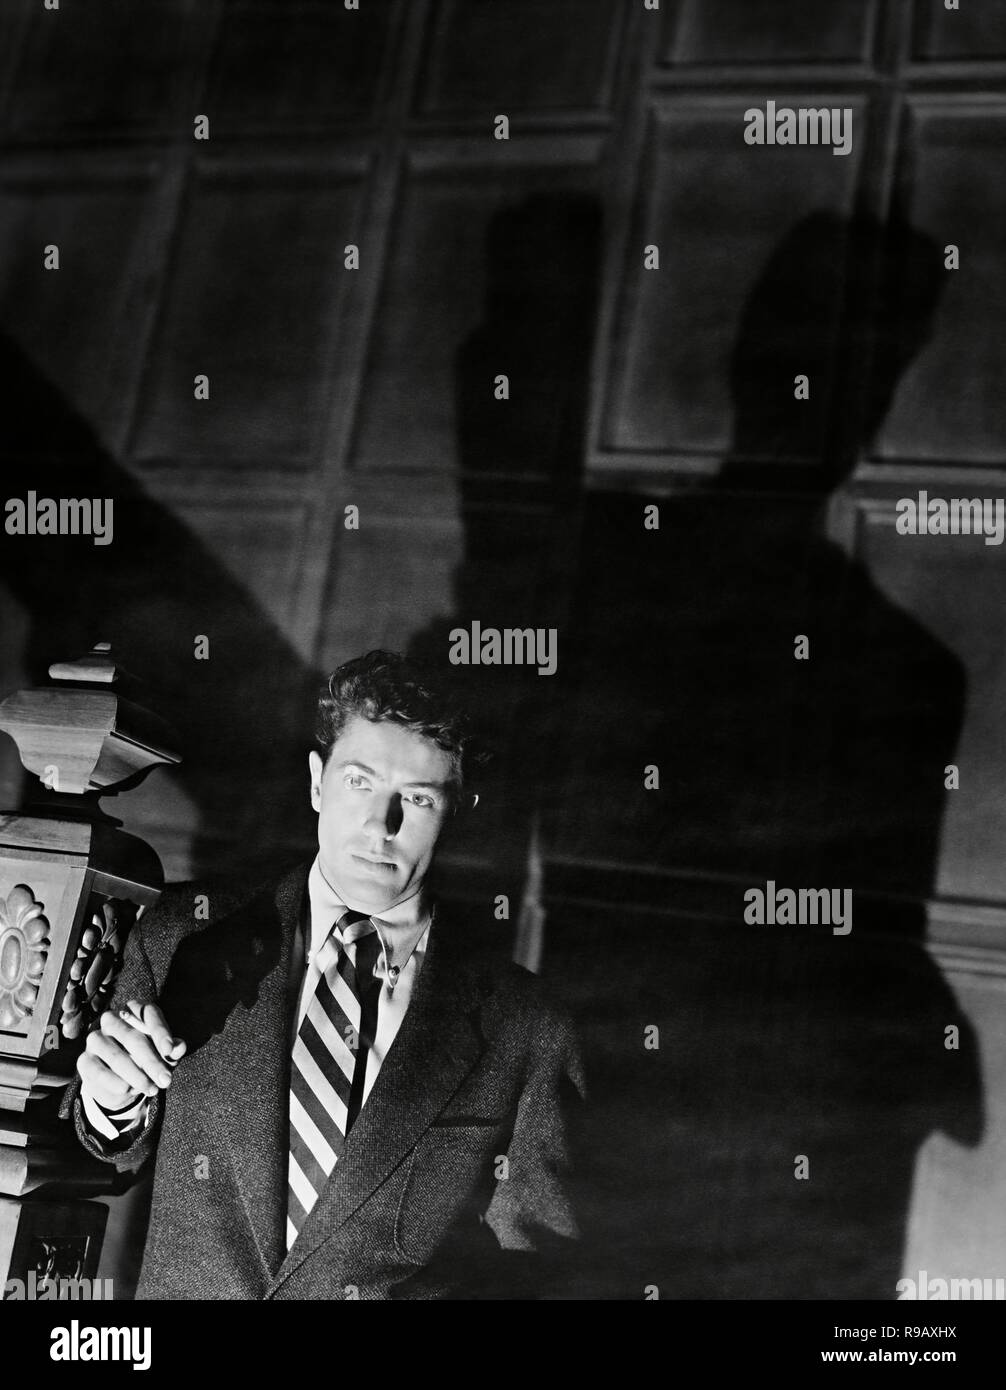 Original film title: STRANGERS ON A TRAIN. English title: STRANGERS ON A TRAIN. Year: 1951. Director: ALFRED HITCHCOCK. Stars: FARLEY GRANGER. Credit: WARNER BROTHERS / Album Stock Photo